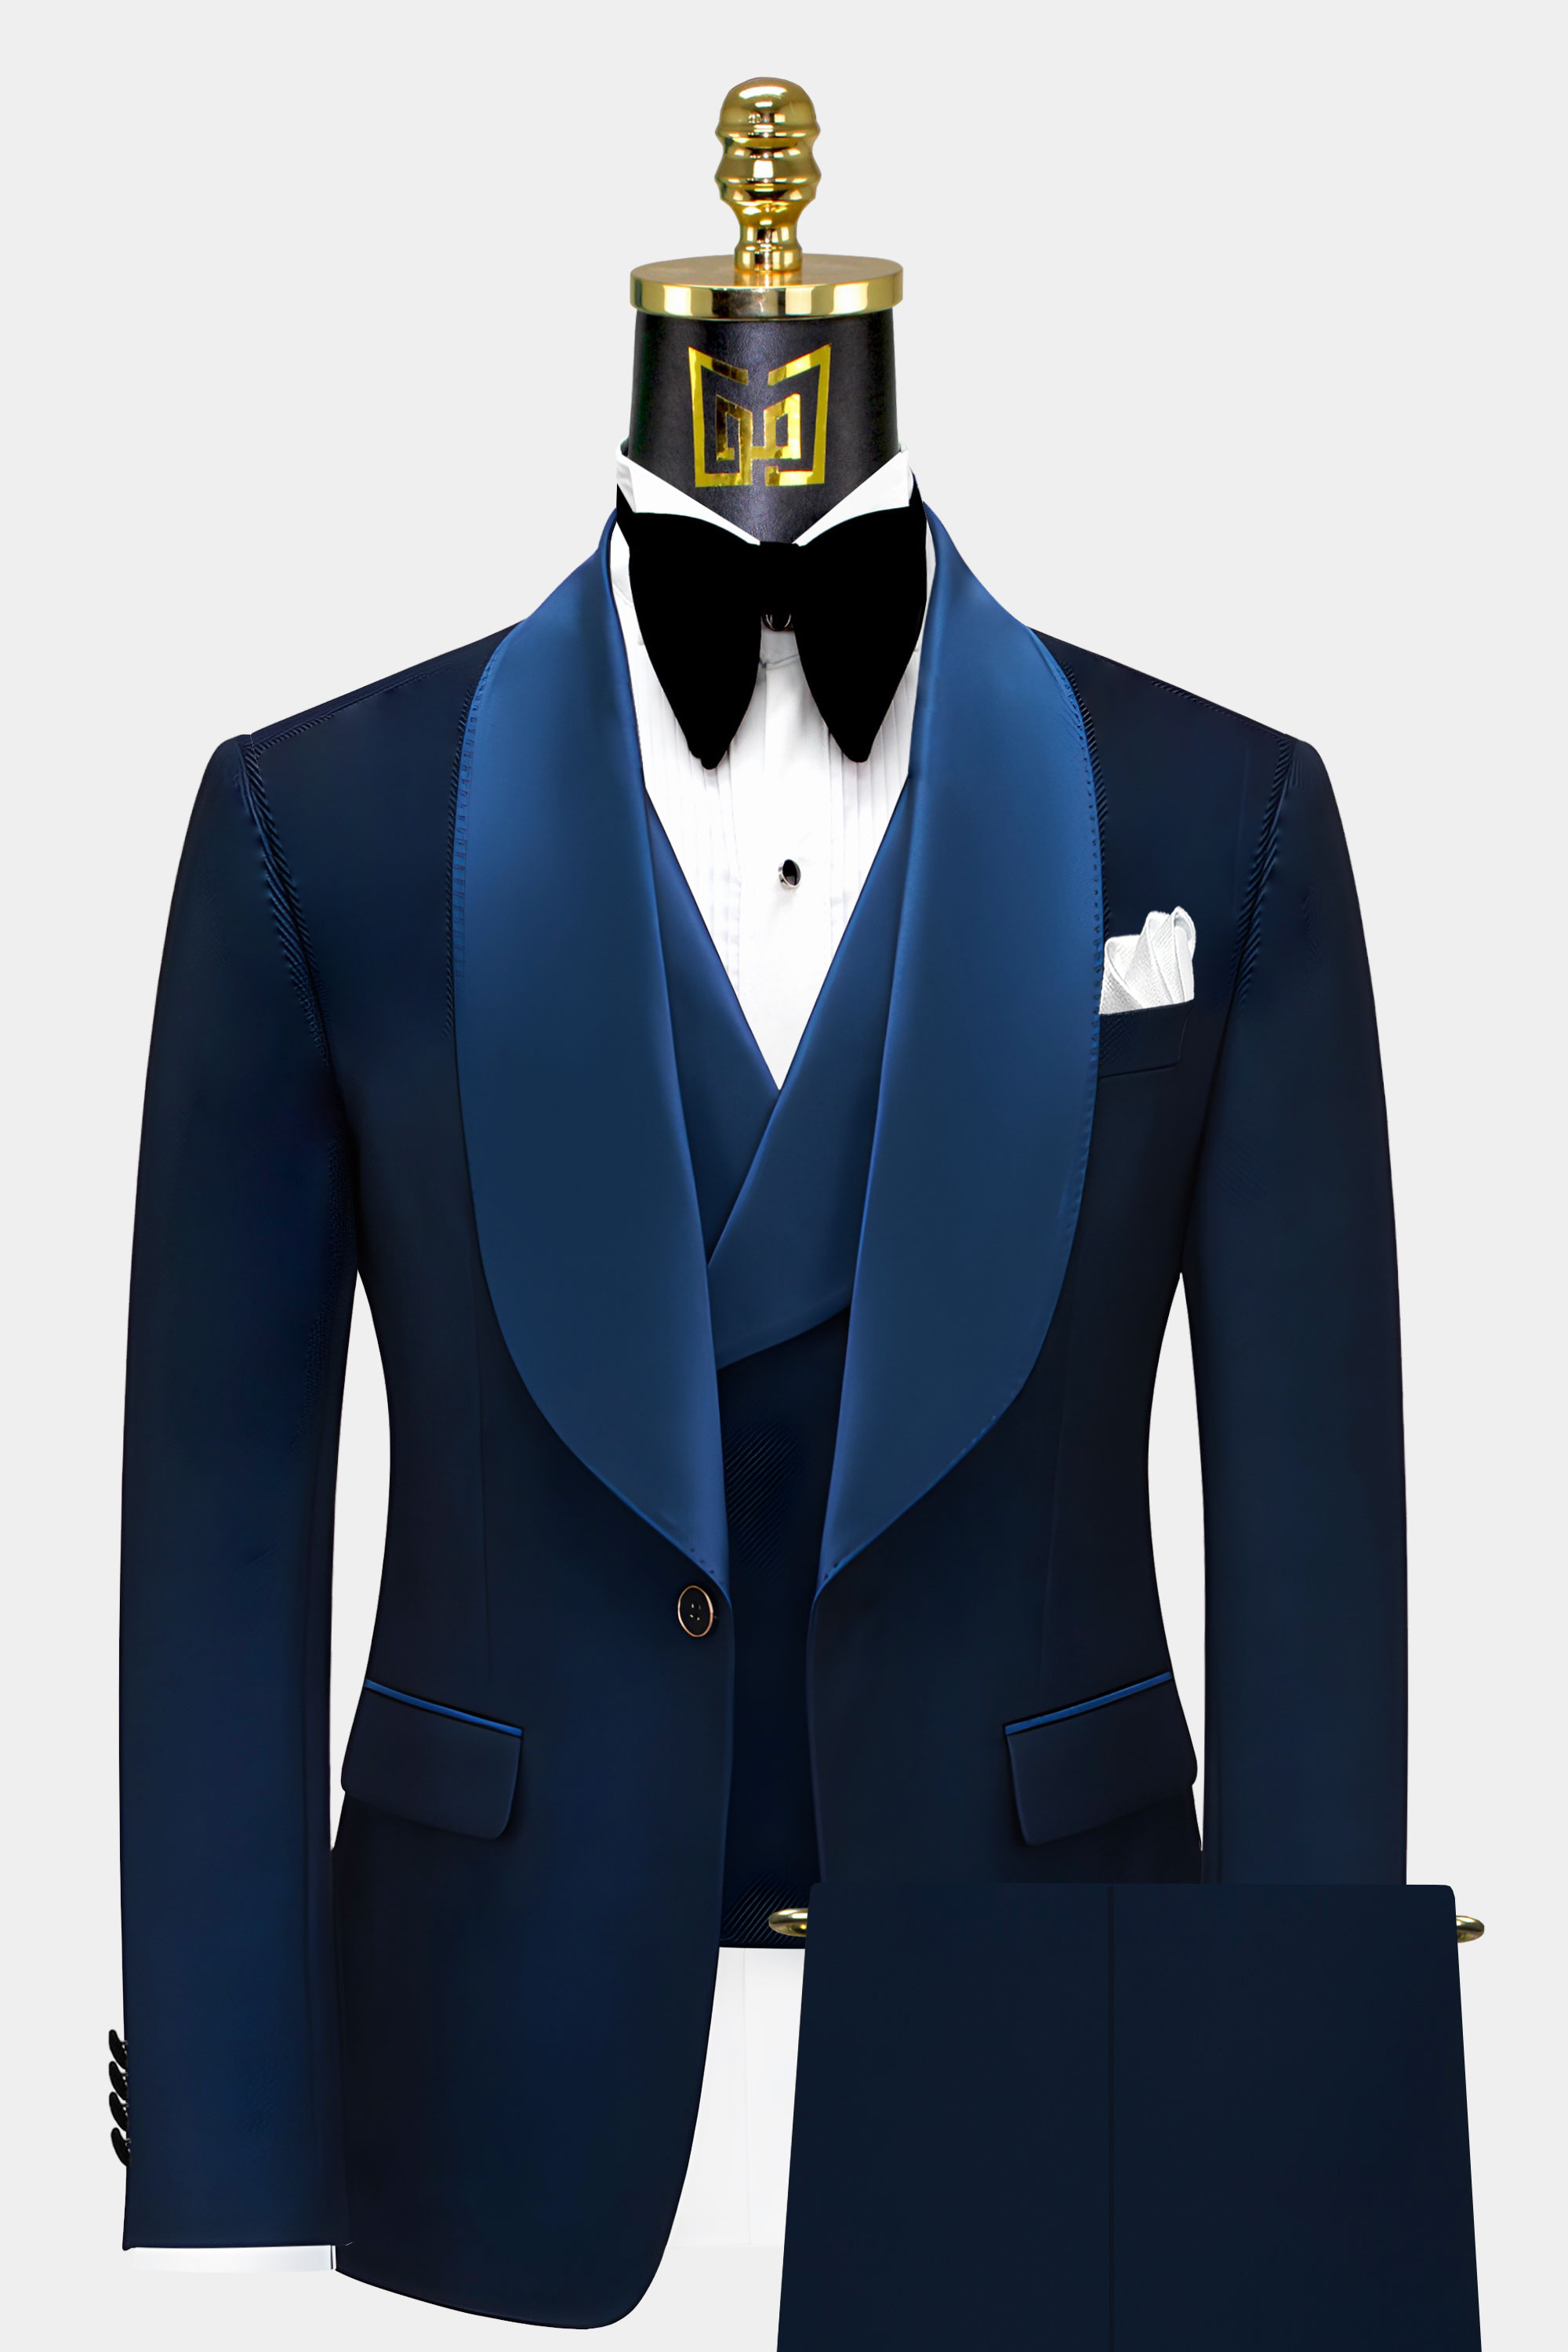 Mens-Navy-Blue-Diamond-Tuxedo-Suit-Groom-Wedding-Attire-from-Gentlemansguru.com